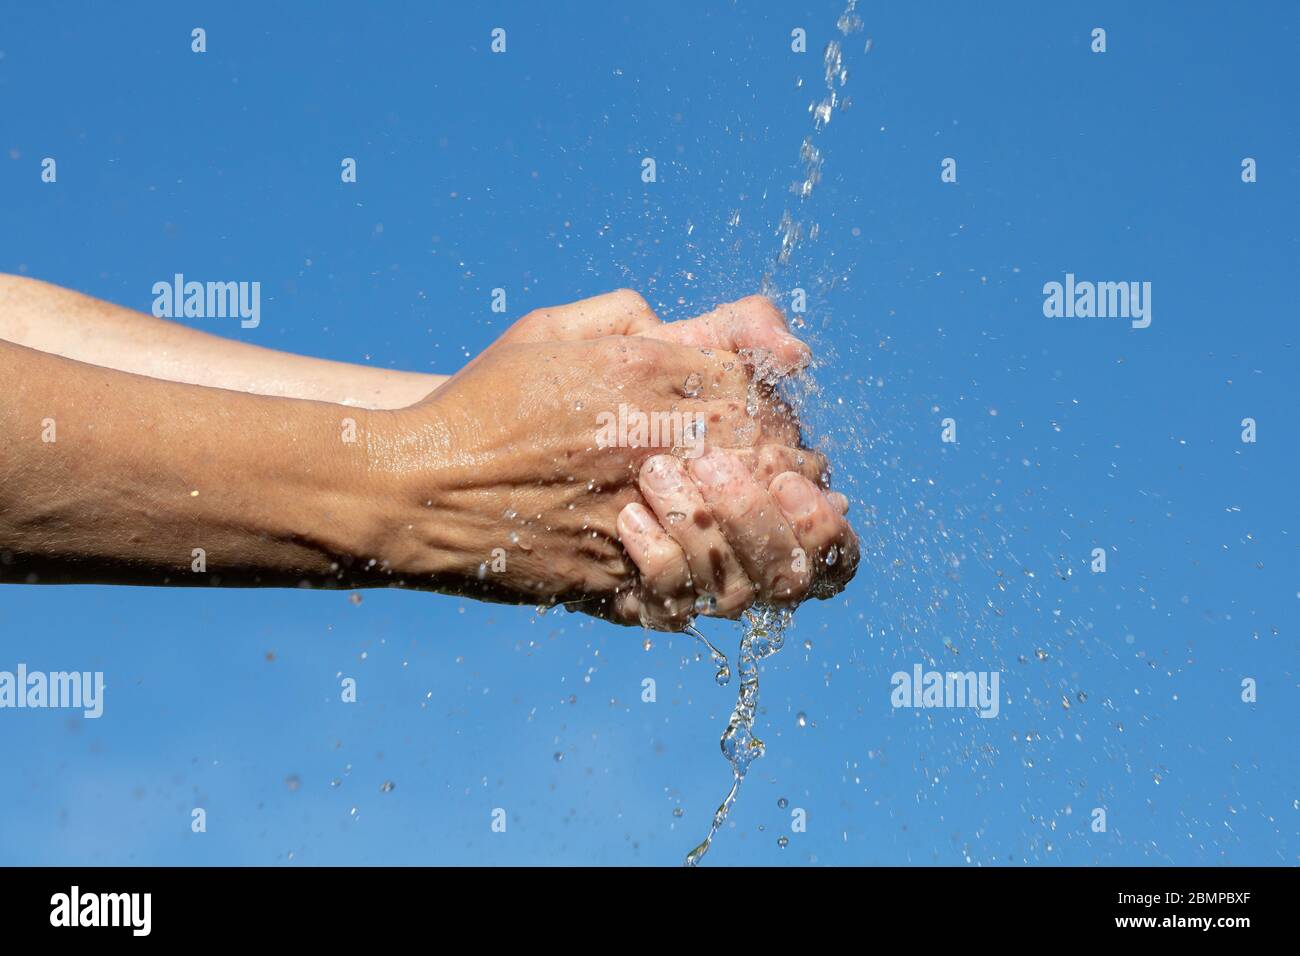 Washing hands under running water in nature Stock Photo